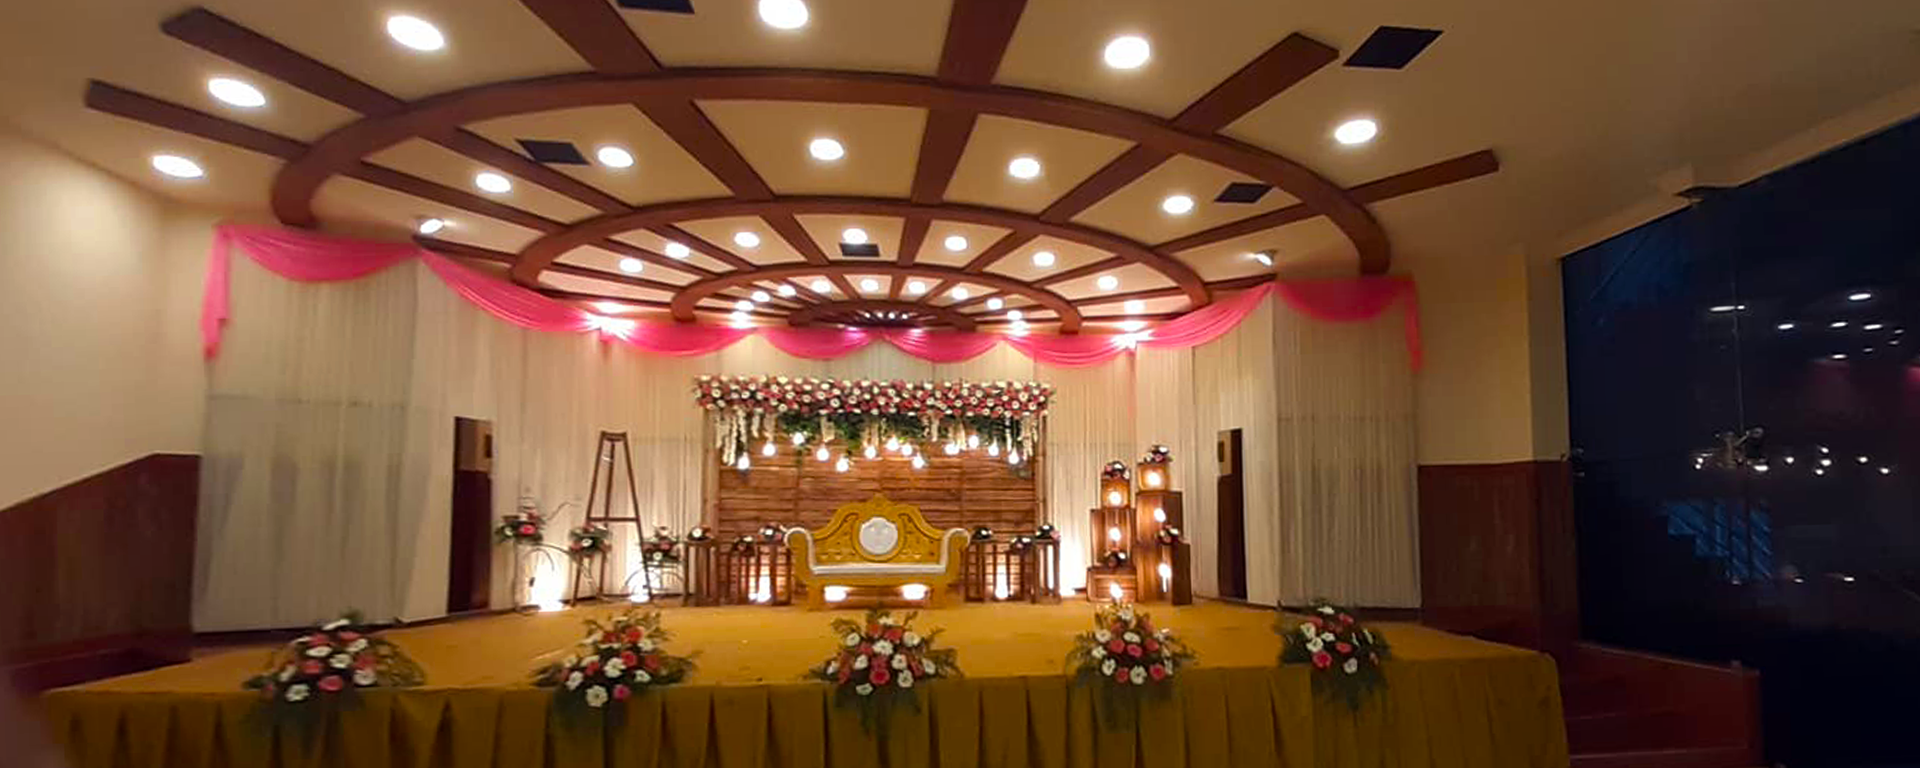 Ramraj-Wedding-Hall-Header-Image-1